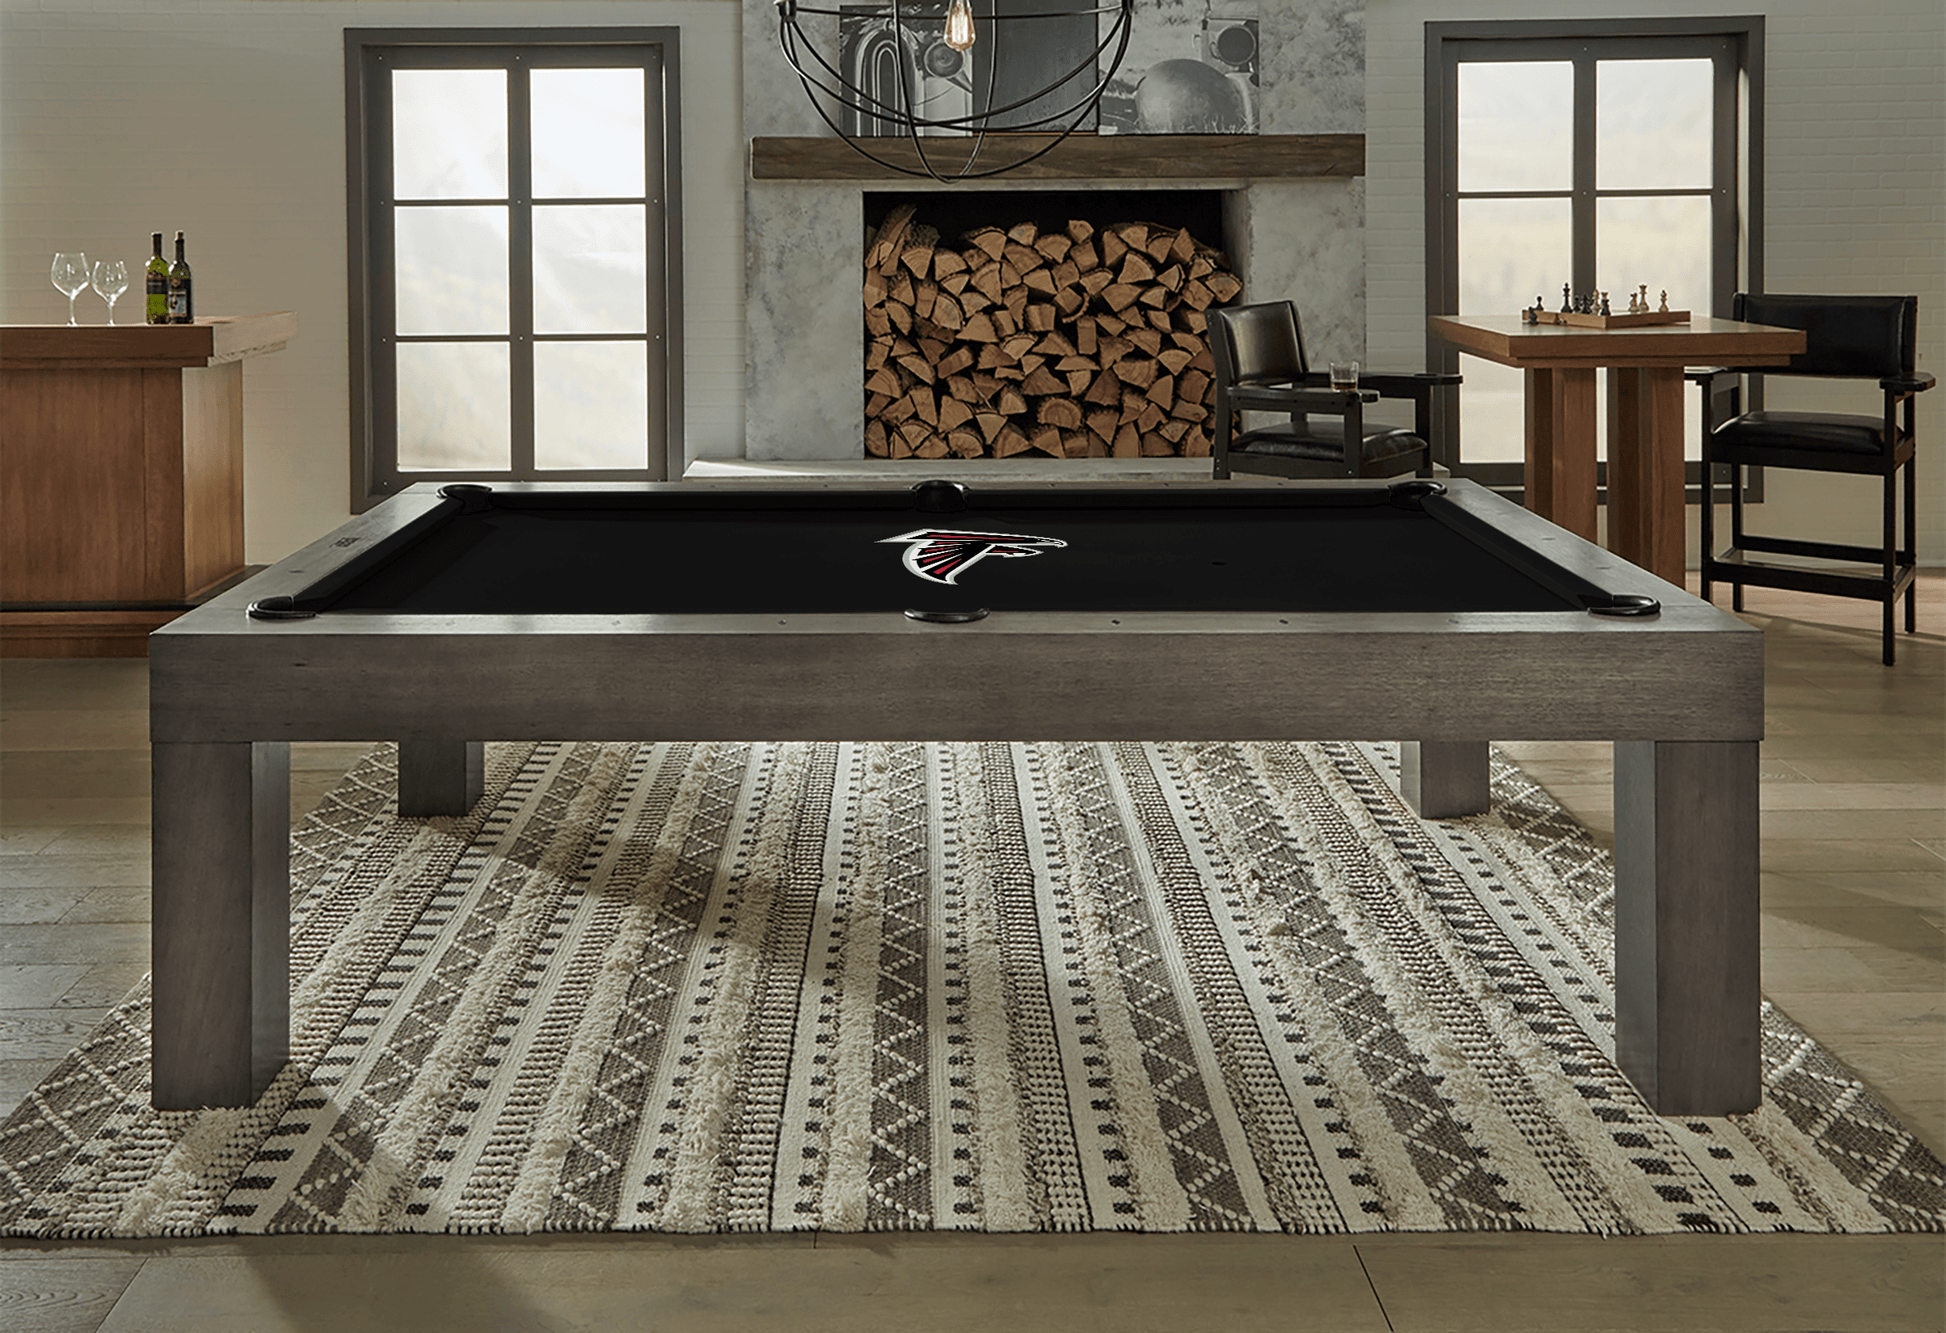 Atlanta Falcons Premium Pool Table Bundle - Charcoal Pool Bundle Home Arcade Games   